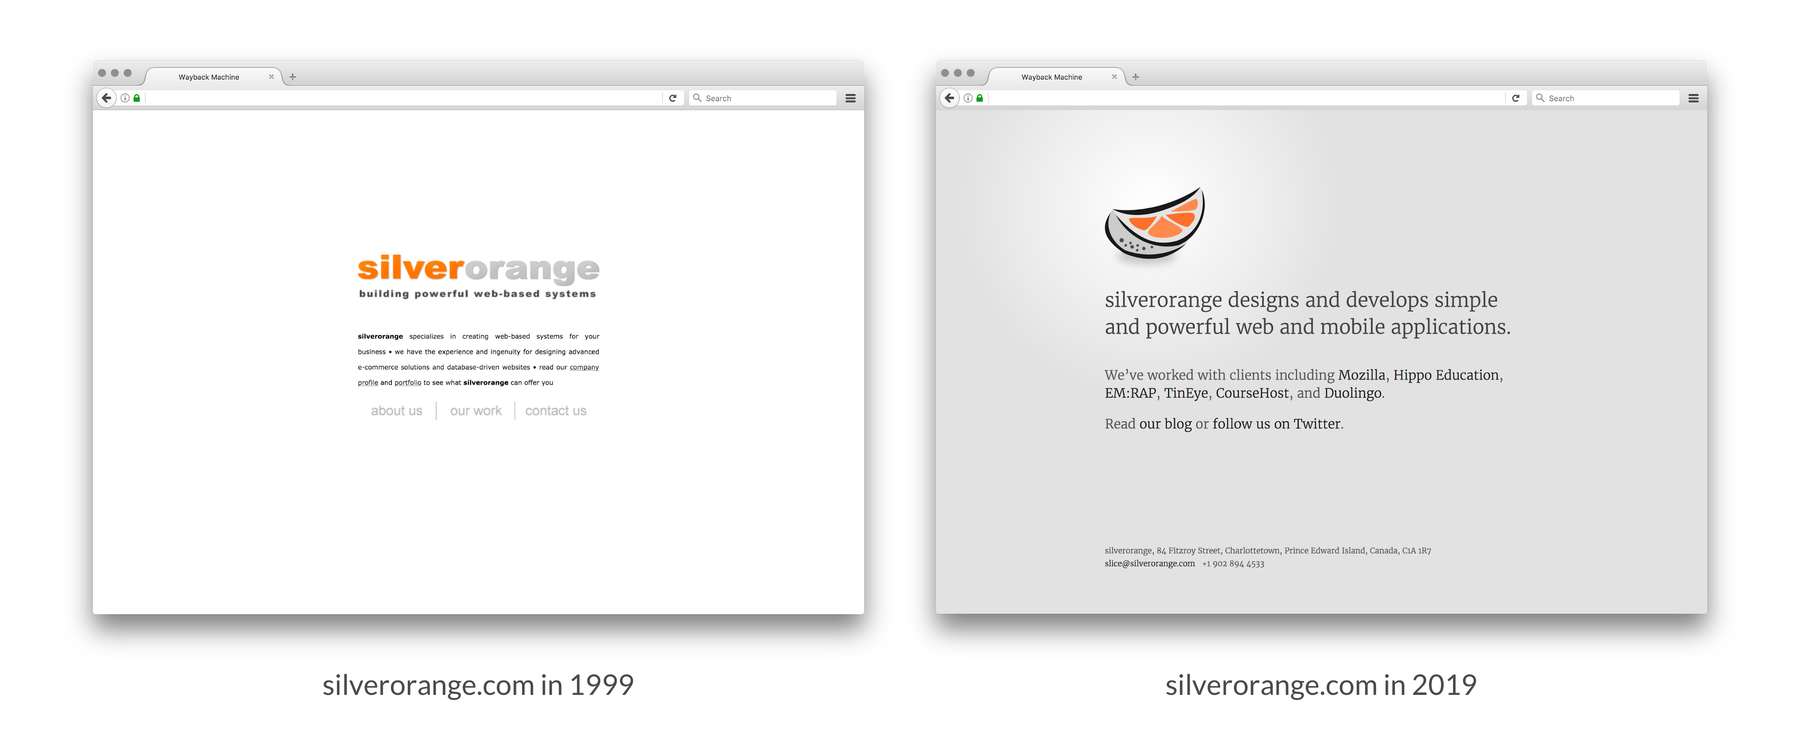 Screenshots of silverorange.com website looking similar in 1999 and in 2019